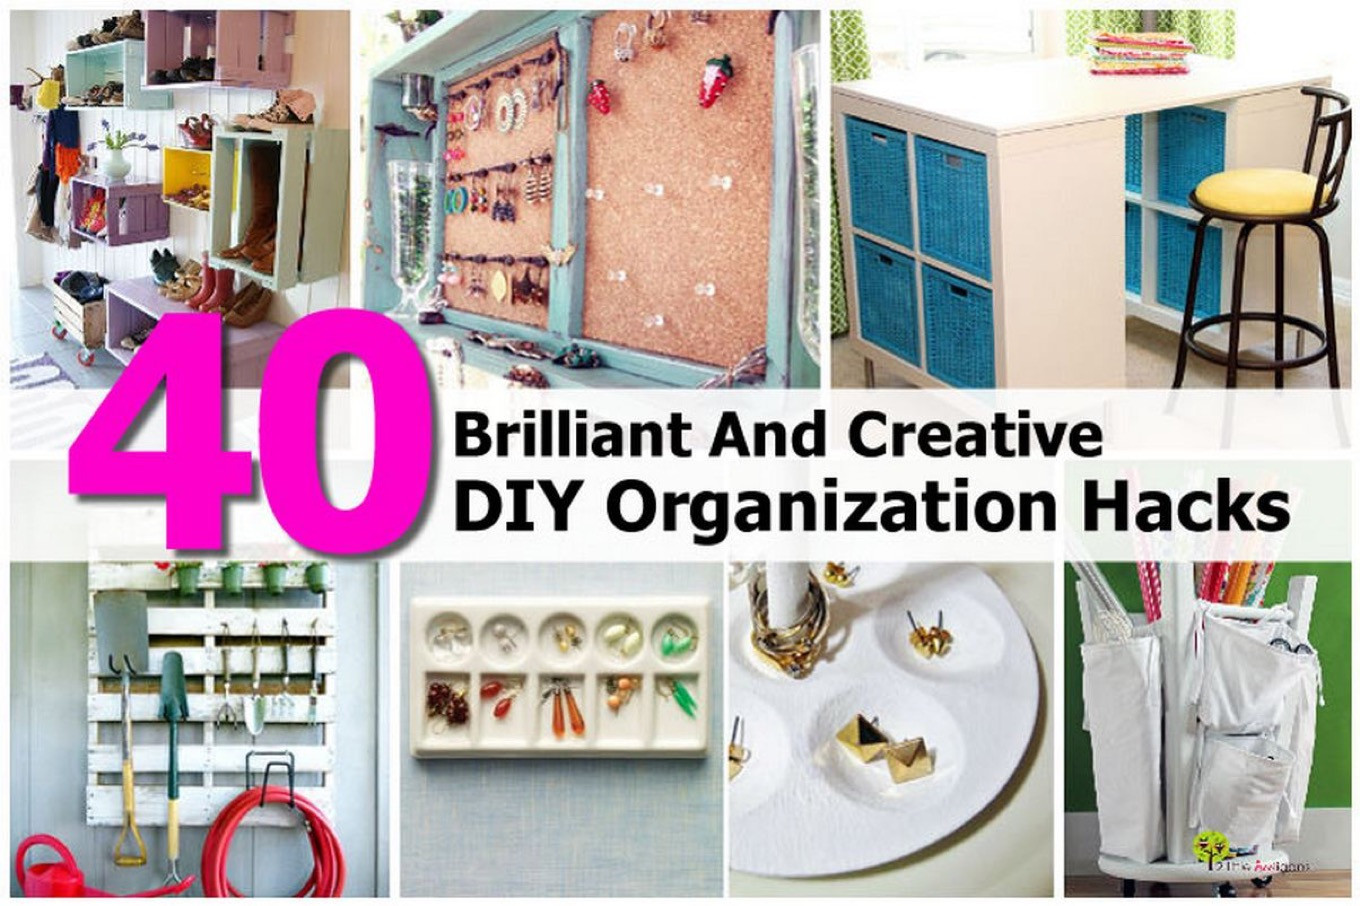 Best ideas about DIY Organization Hacks
. Save or Pin 40 Brilliant And Creative DIY Organization Hacks Now.